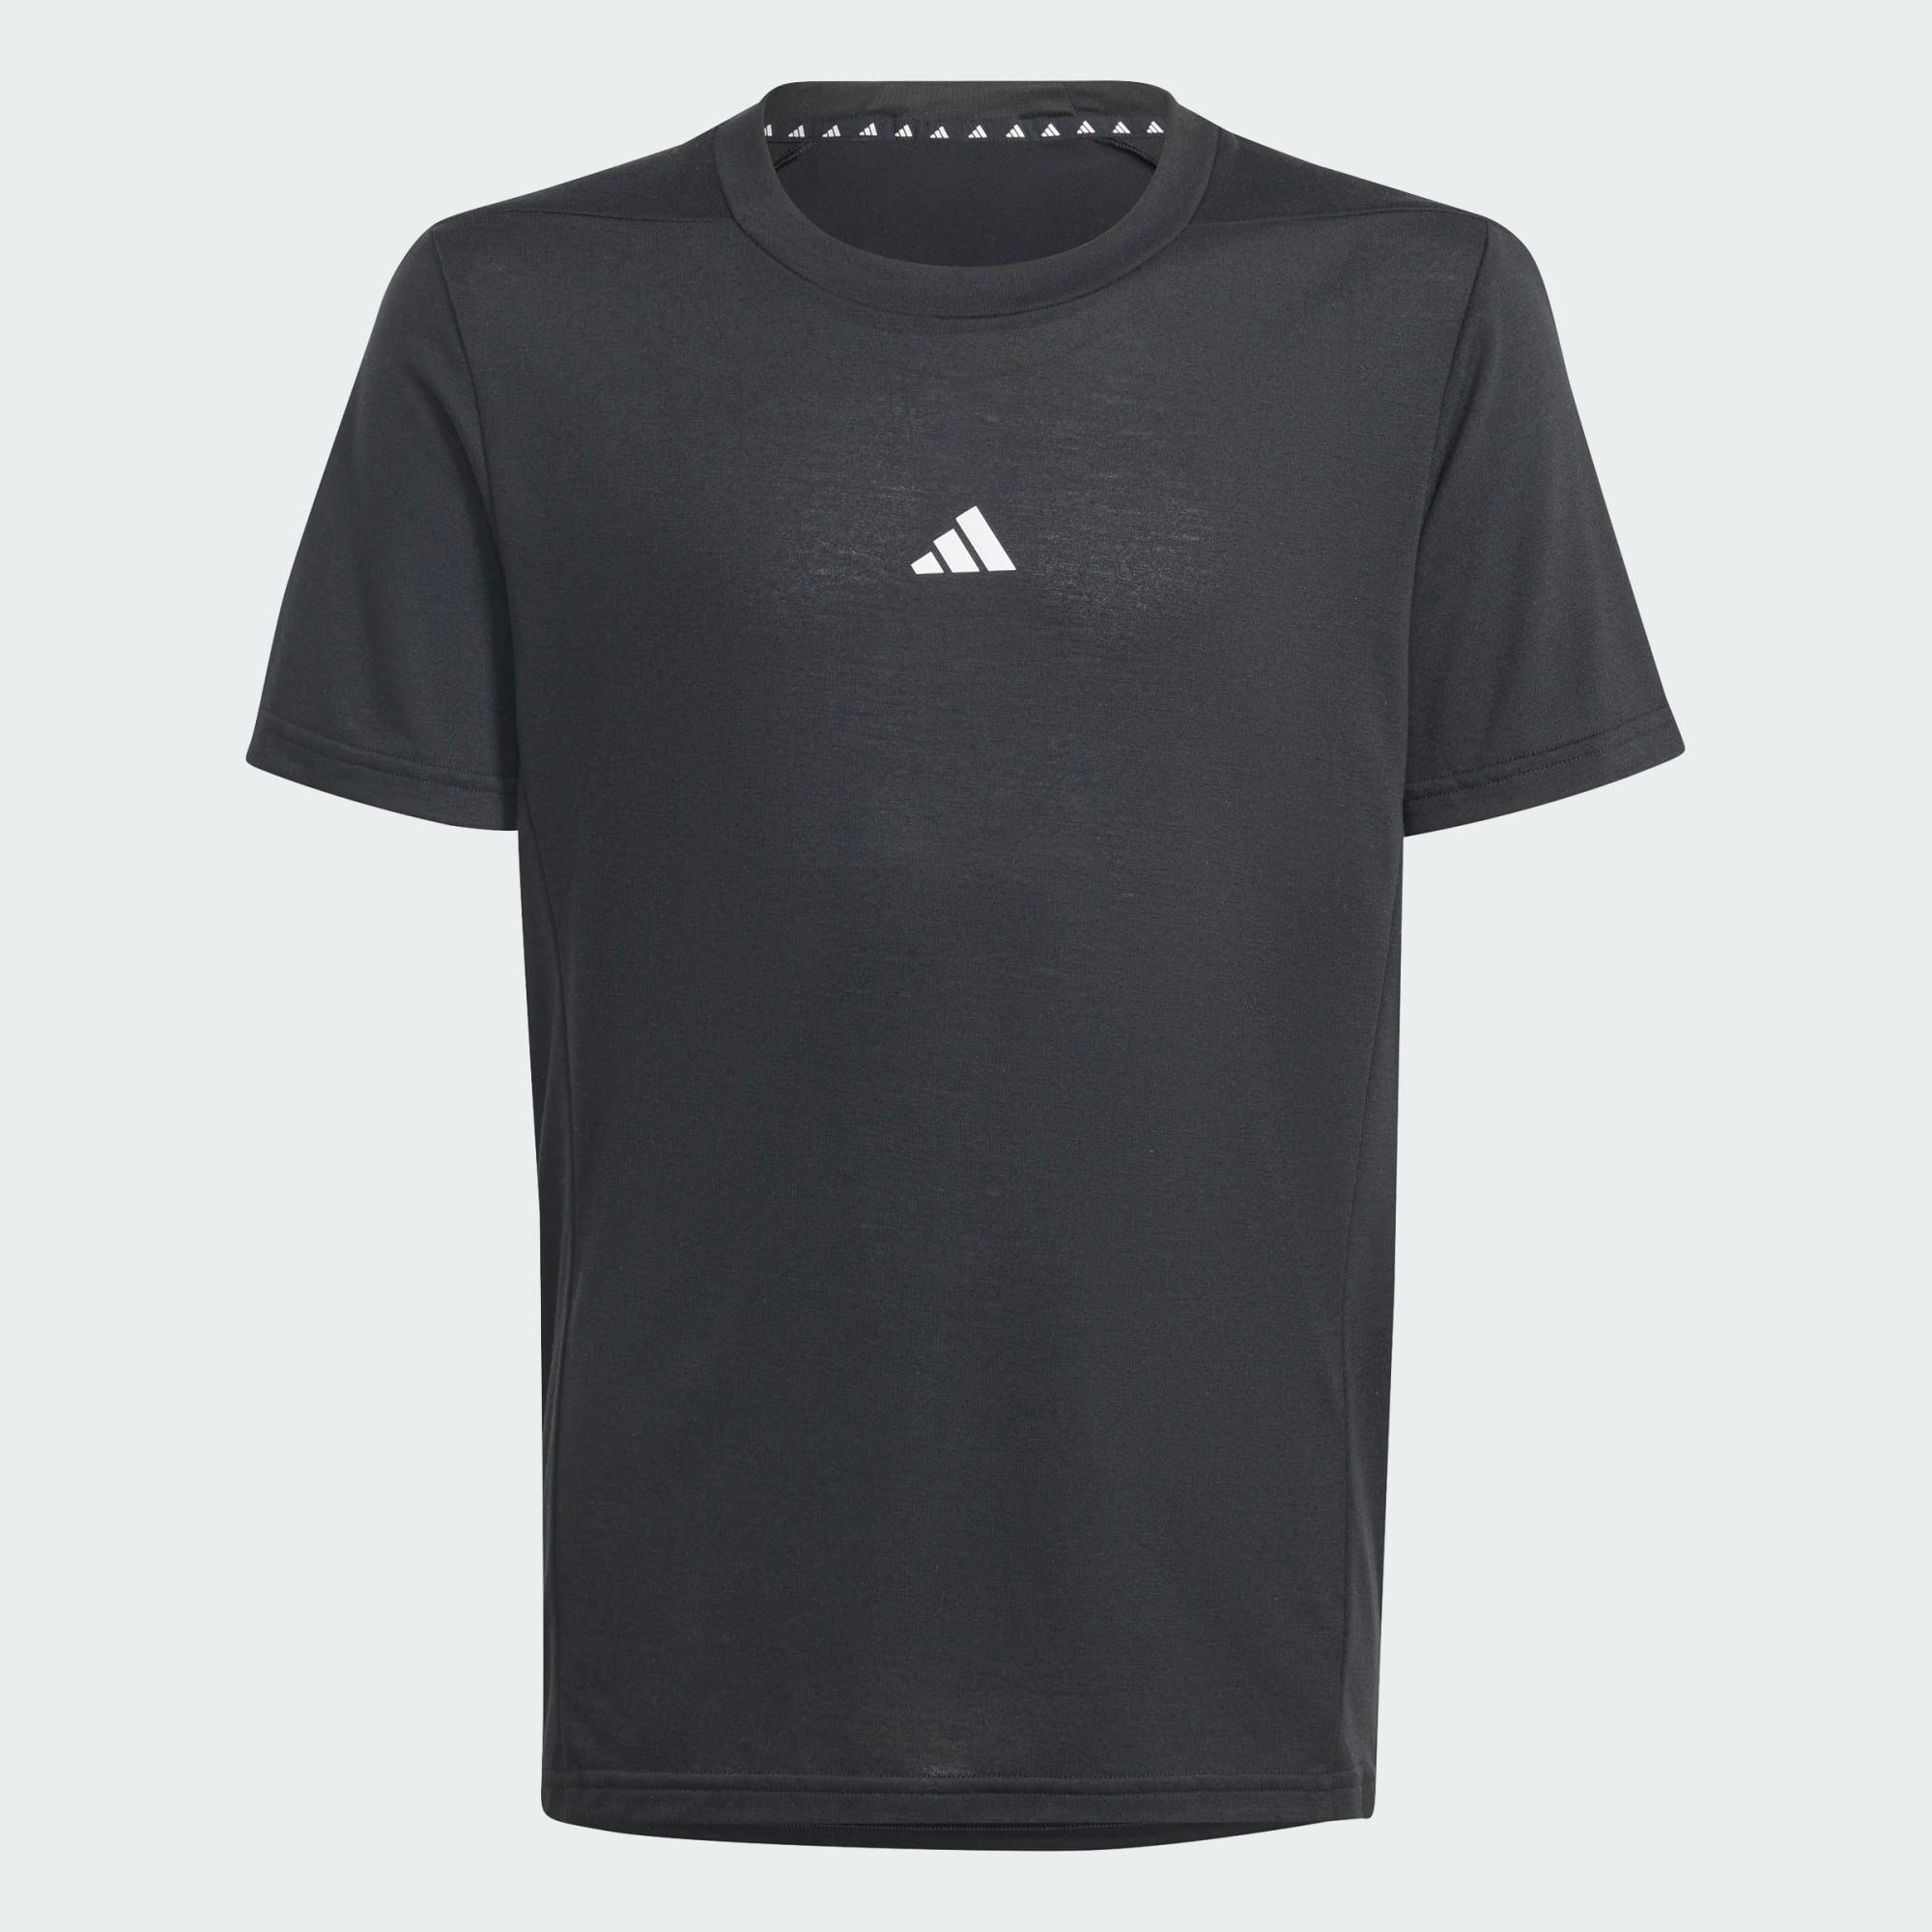 KIDS Silver T-SHIRT TRAINING Black T-Shirt / Reflective adidas AEROREADY Performance